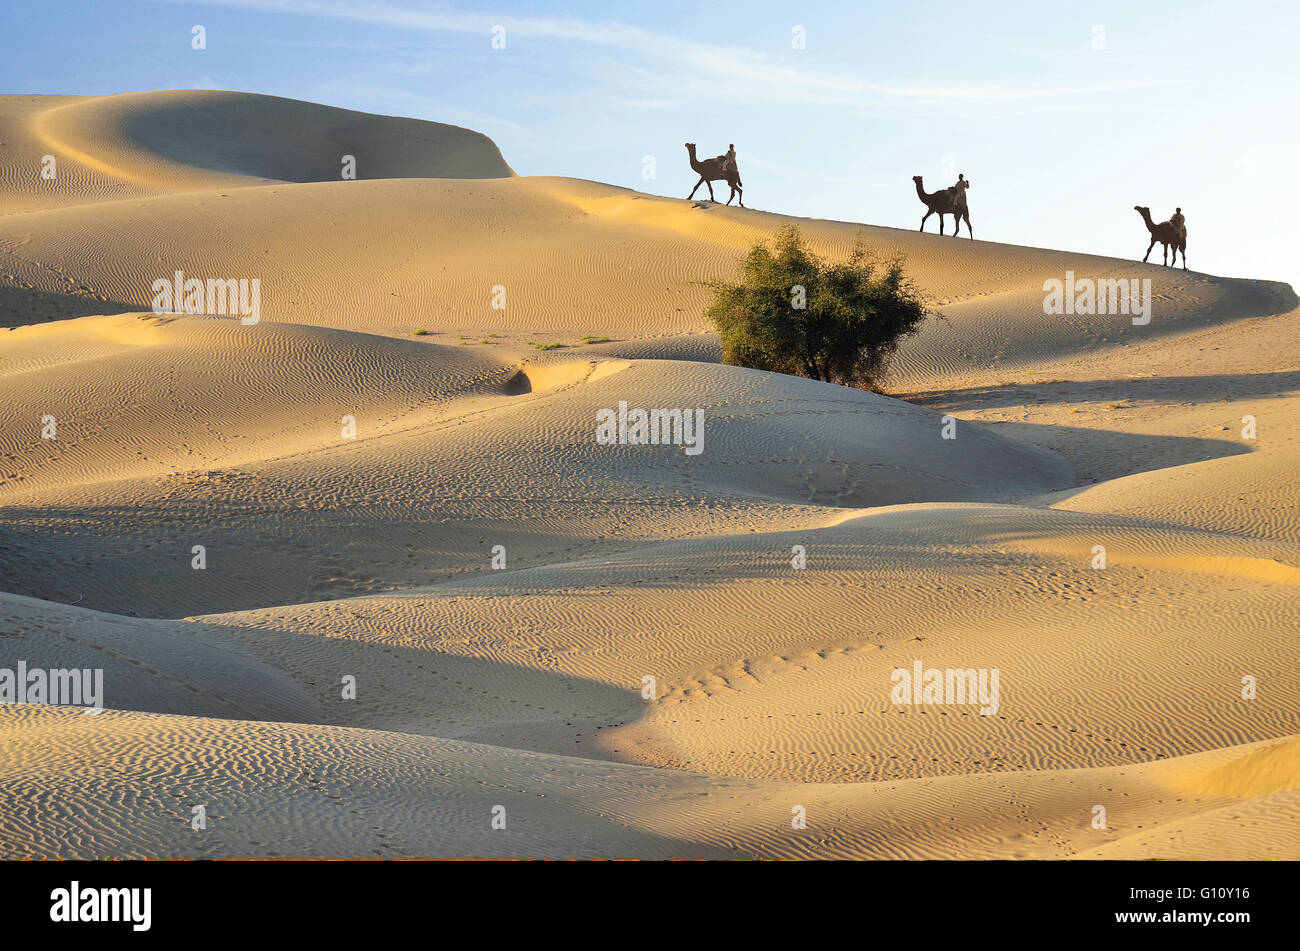 Nomads on camels over sand dunes, Thar desert, Rajasthan, India Stock Photo